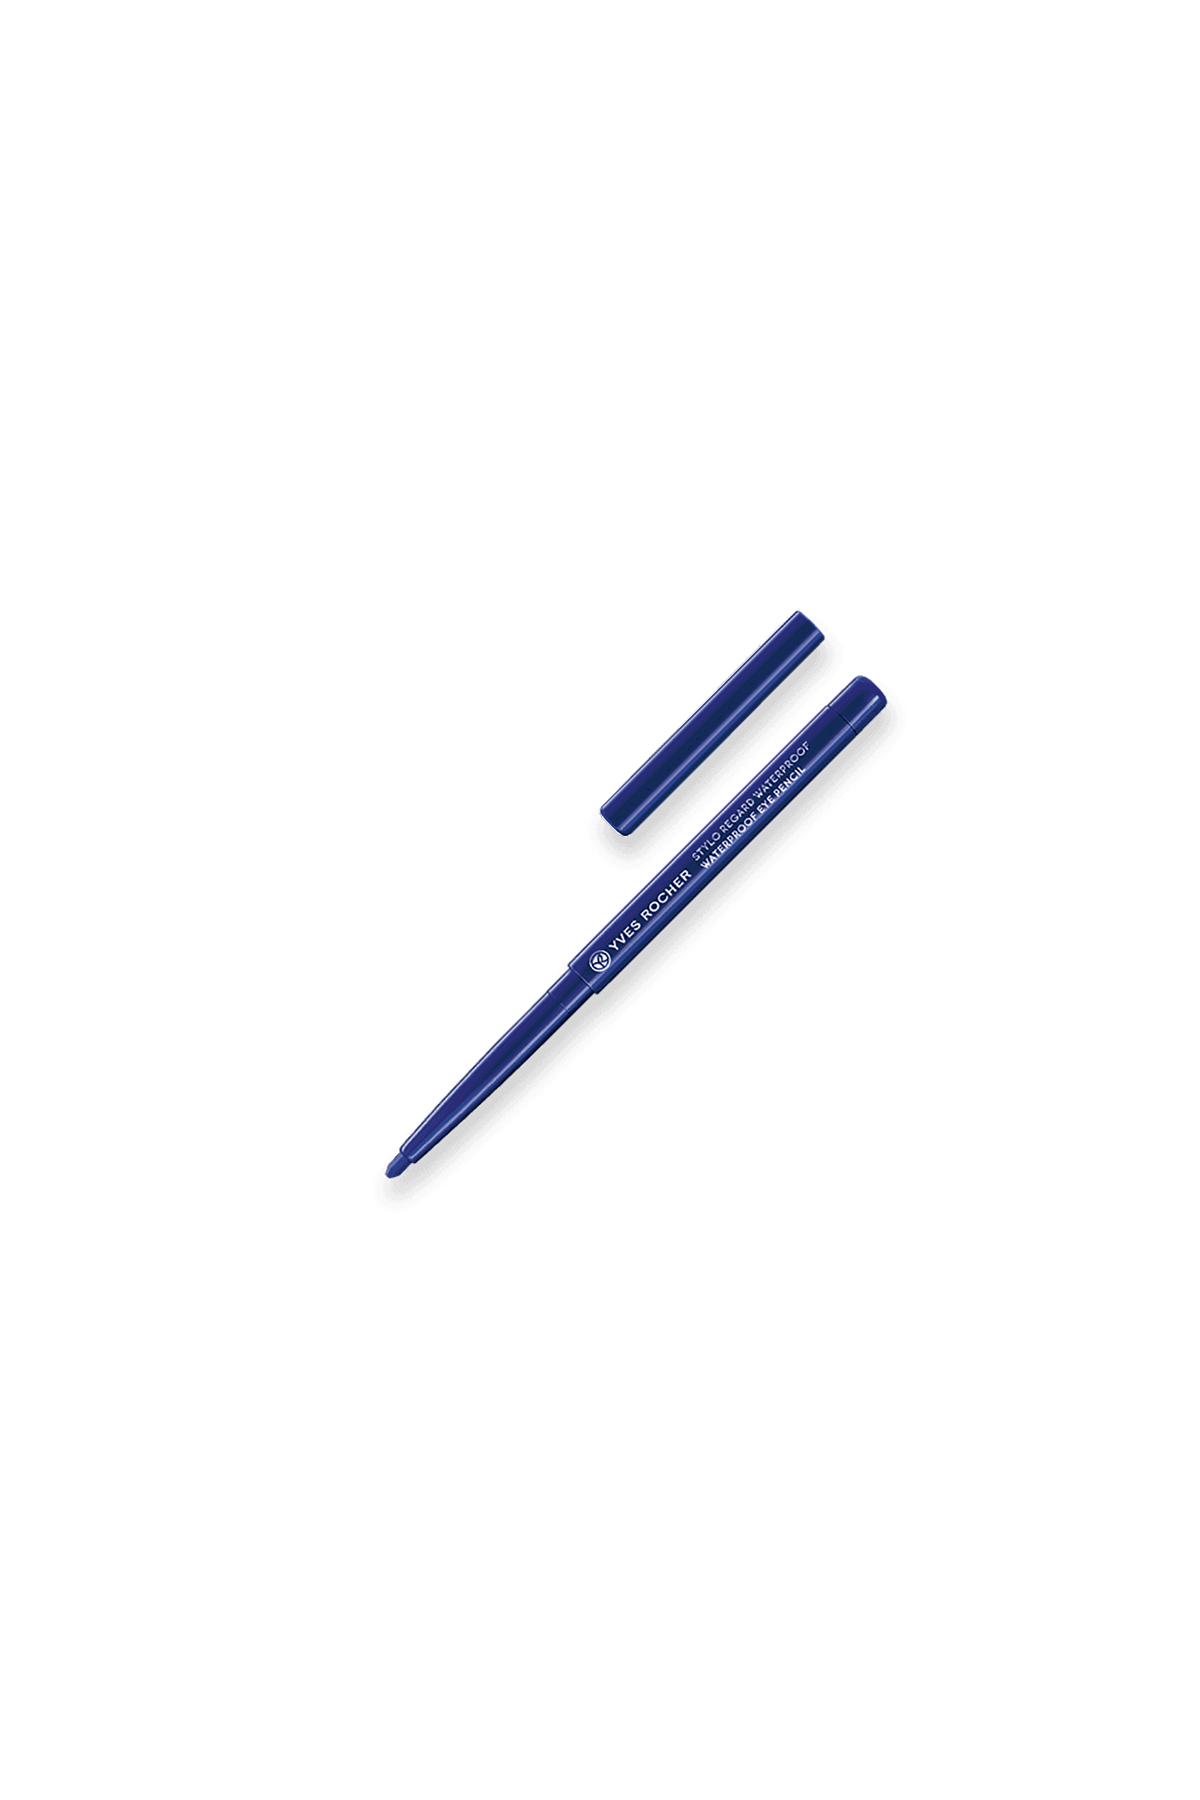 Waterproof Eye Pen Bleu Flash 02 Cn3 0.3G